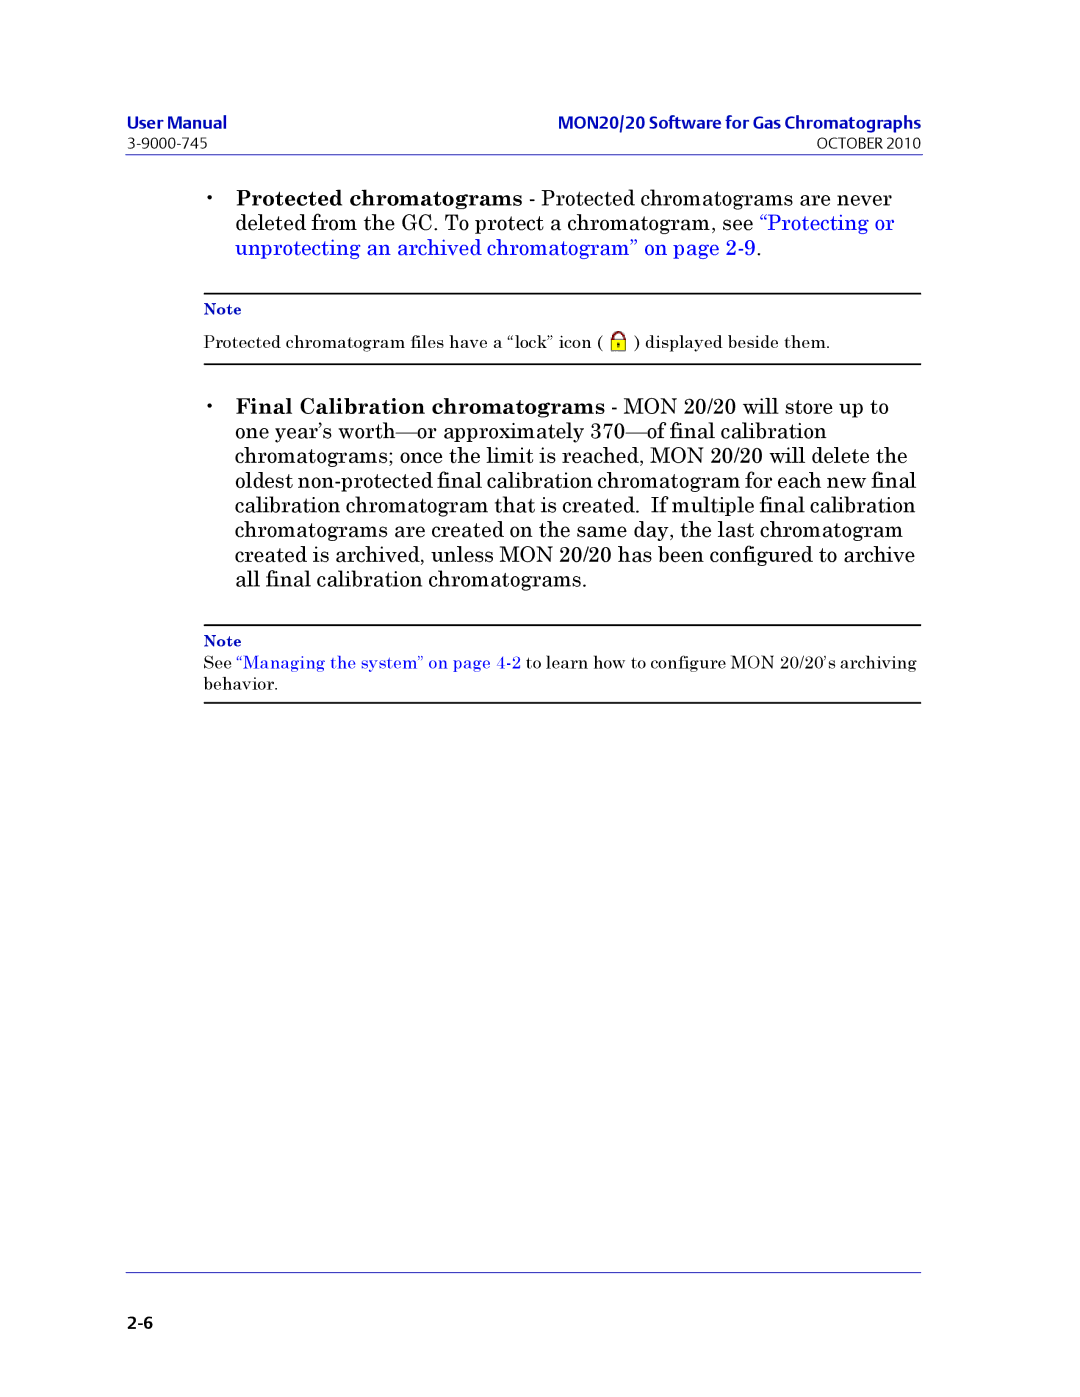 Emerson Process Management 3-9000-745 manual October 